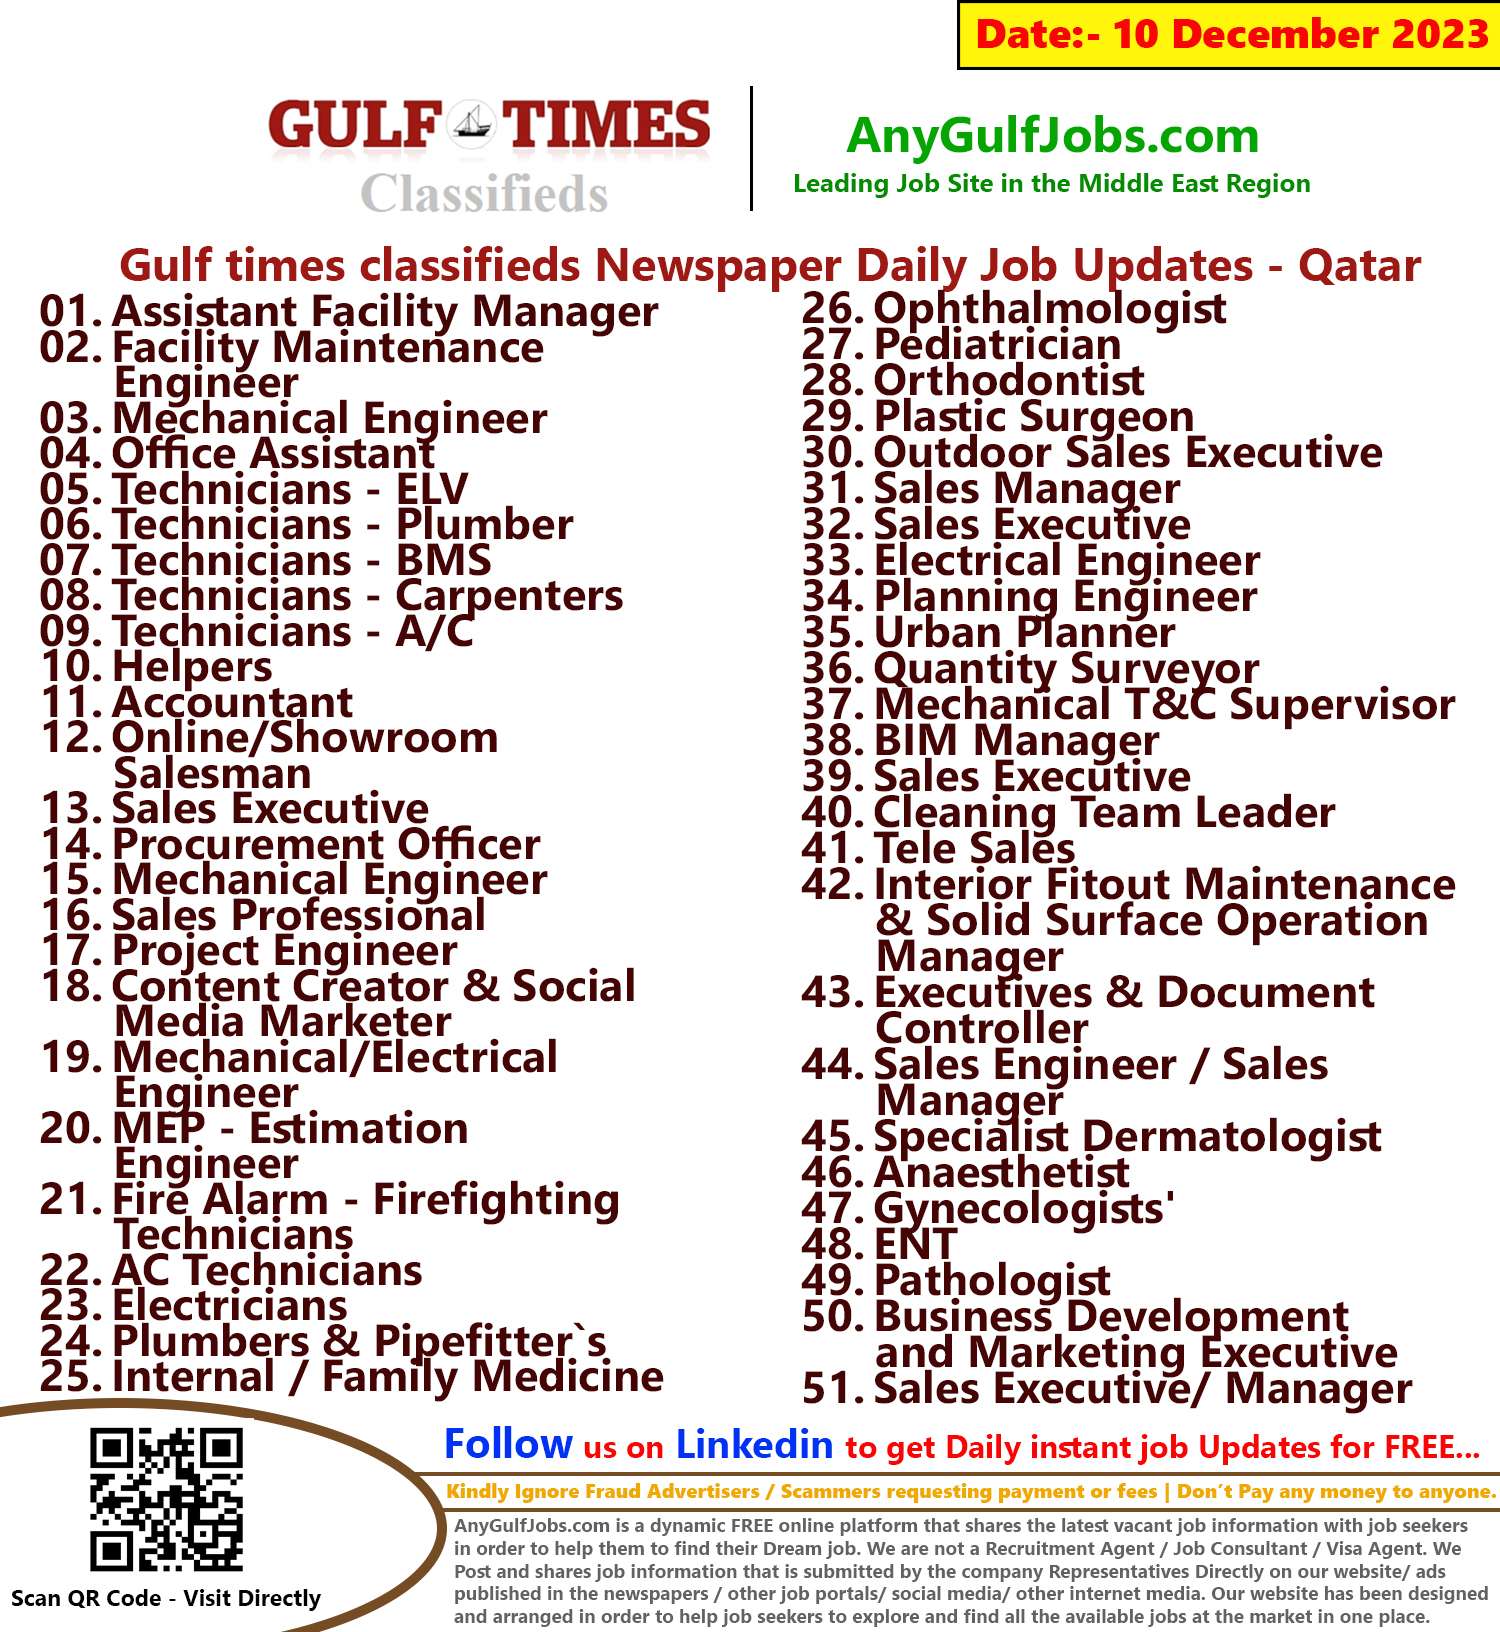 Gulf Times Classifieds Job Vacancies Qatar - 10 December 2023